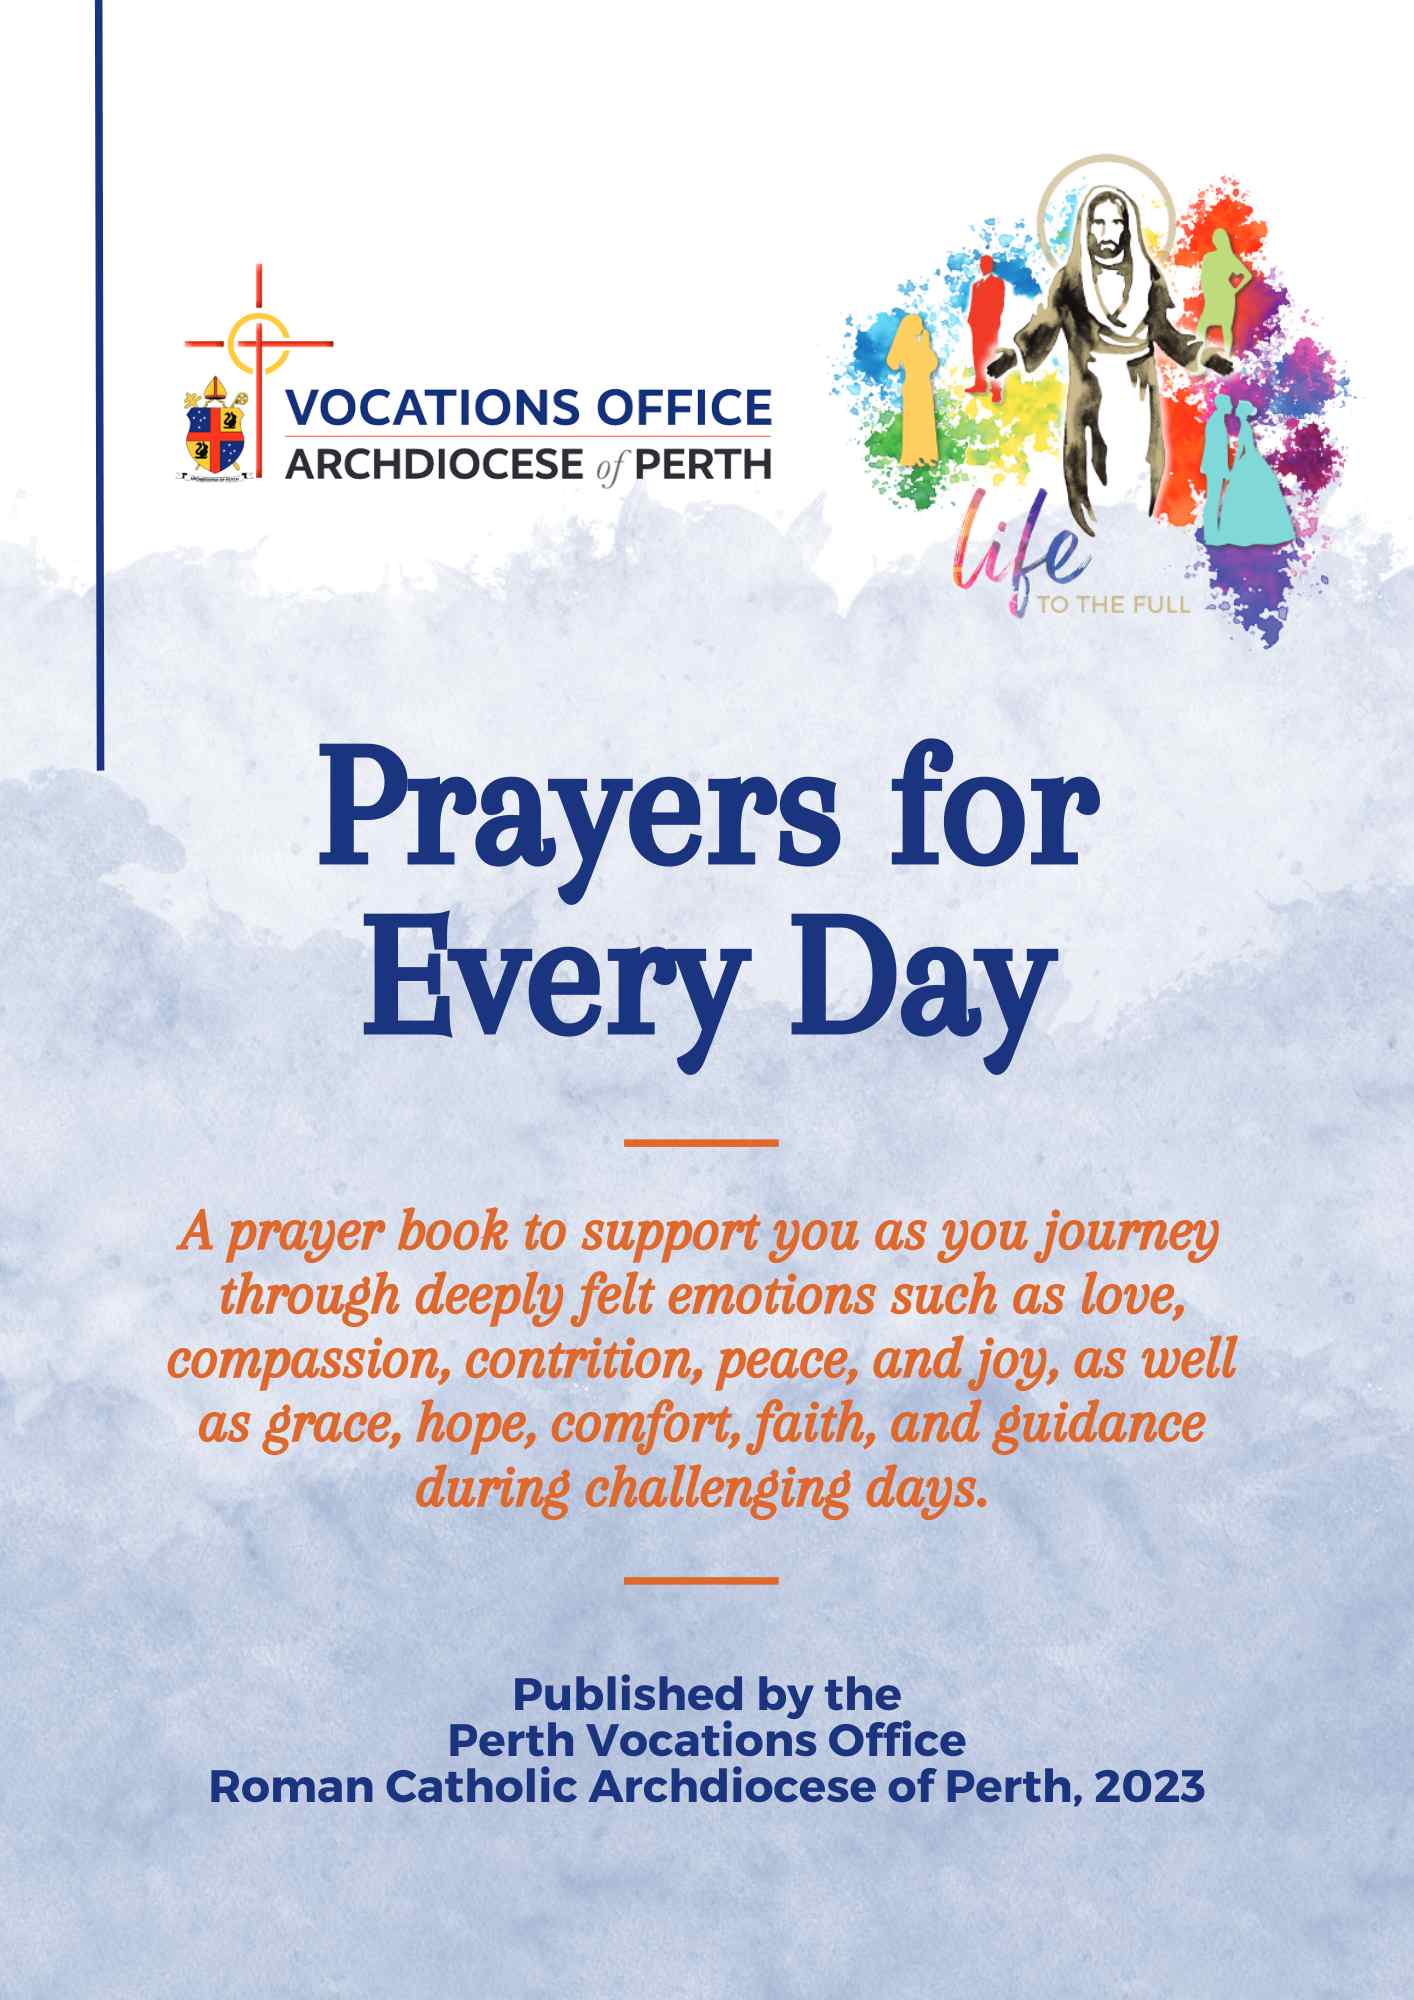 Vocations Prayer Book